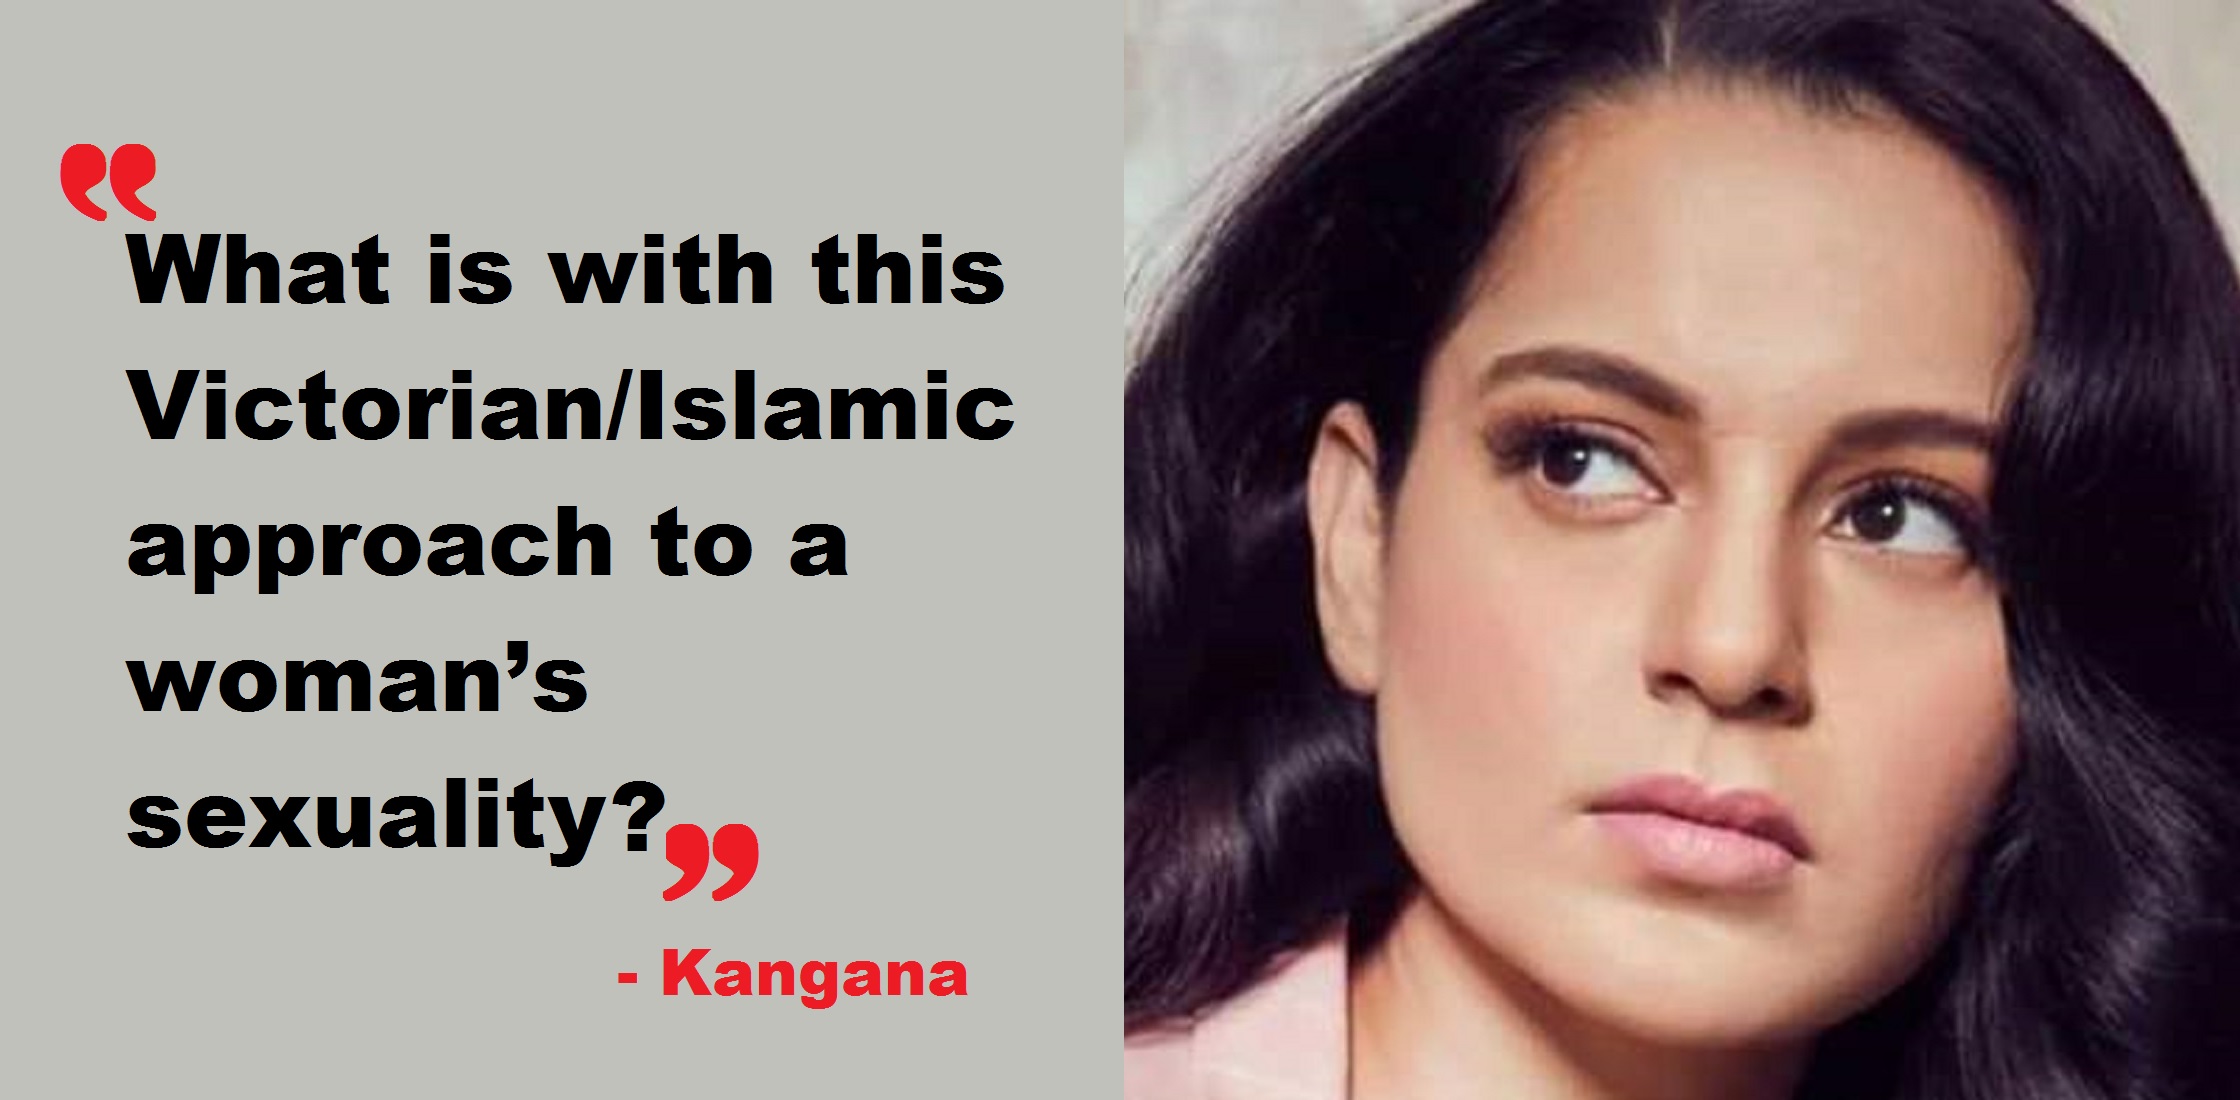 Kangana Ranaut Responds To Trolls Mocking Her For Having ‘Pre-Marital Sex’, Here’s What She Said…